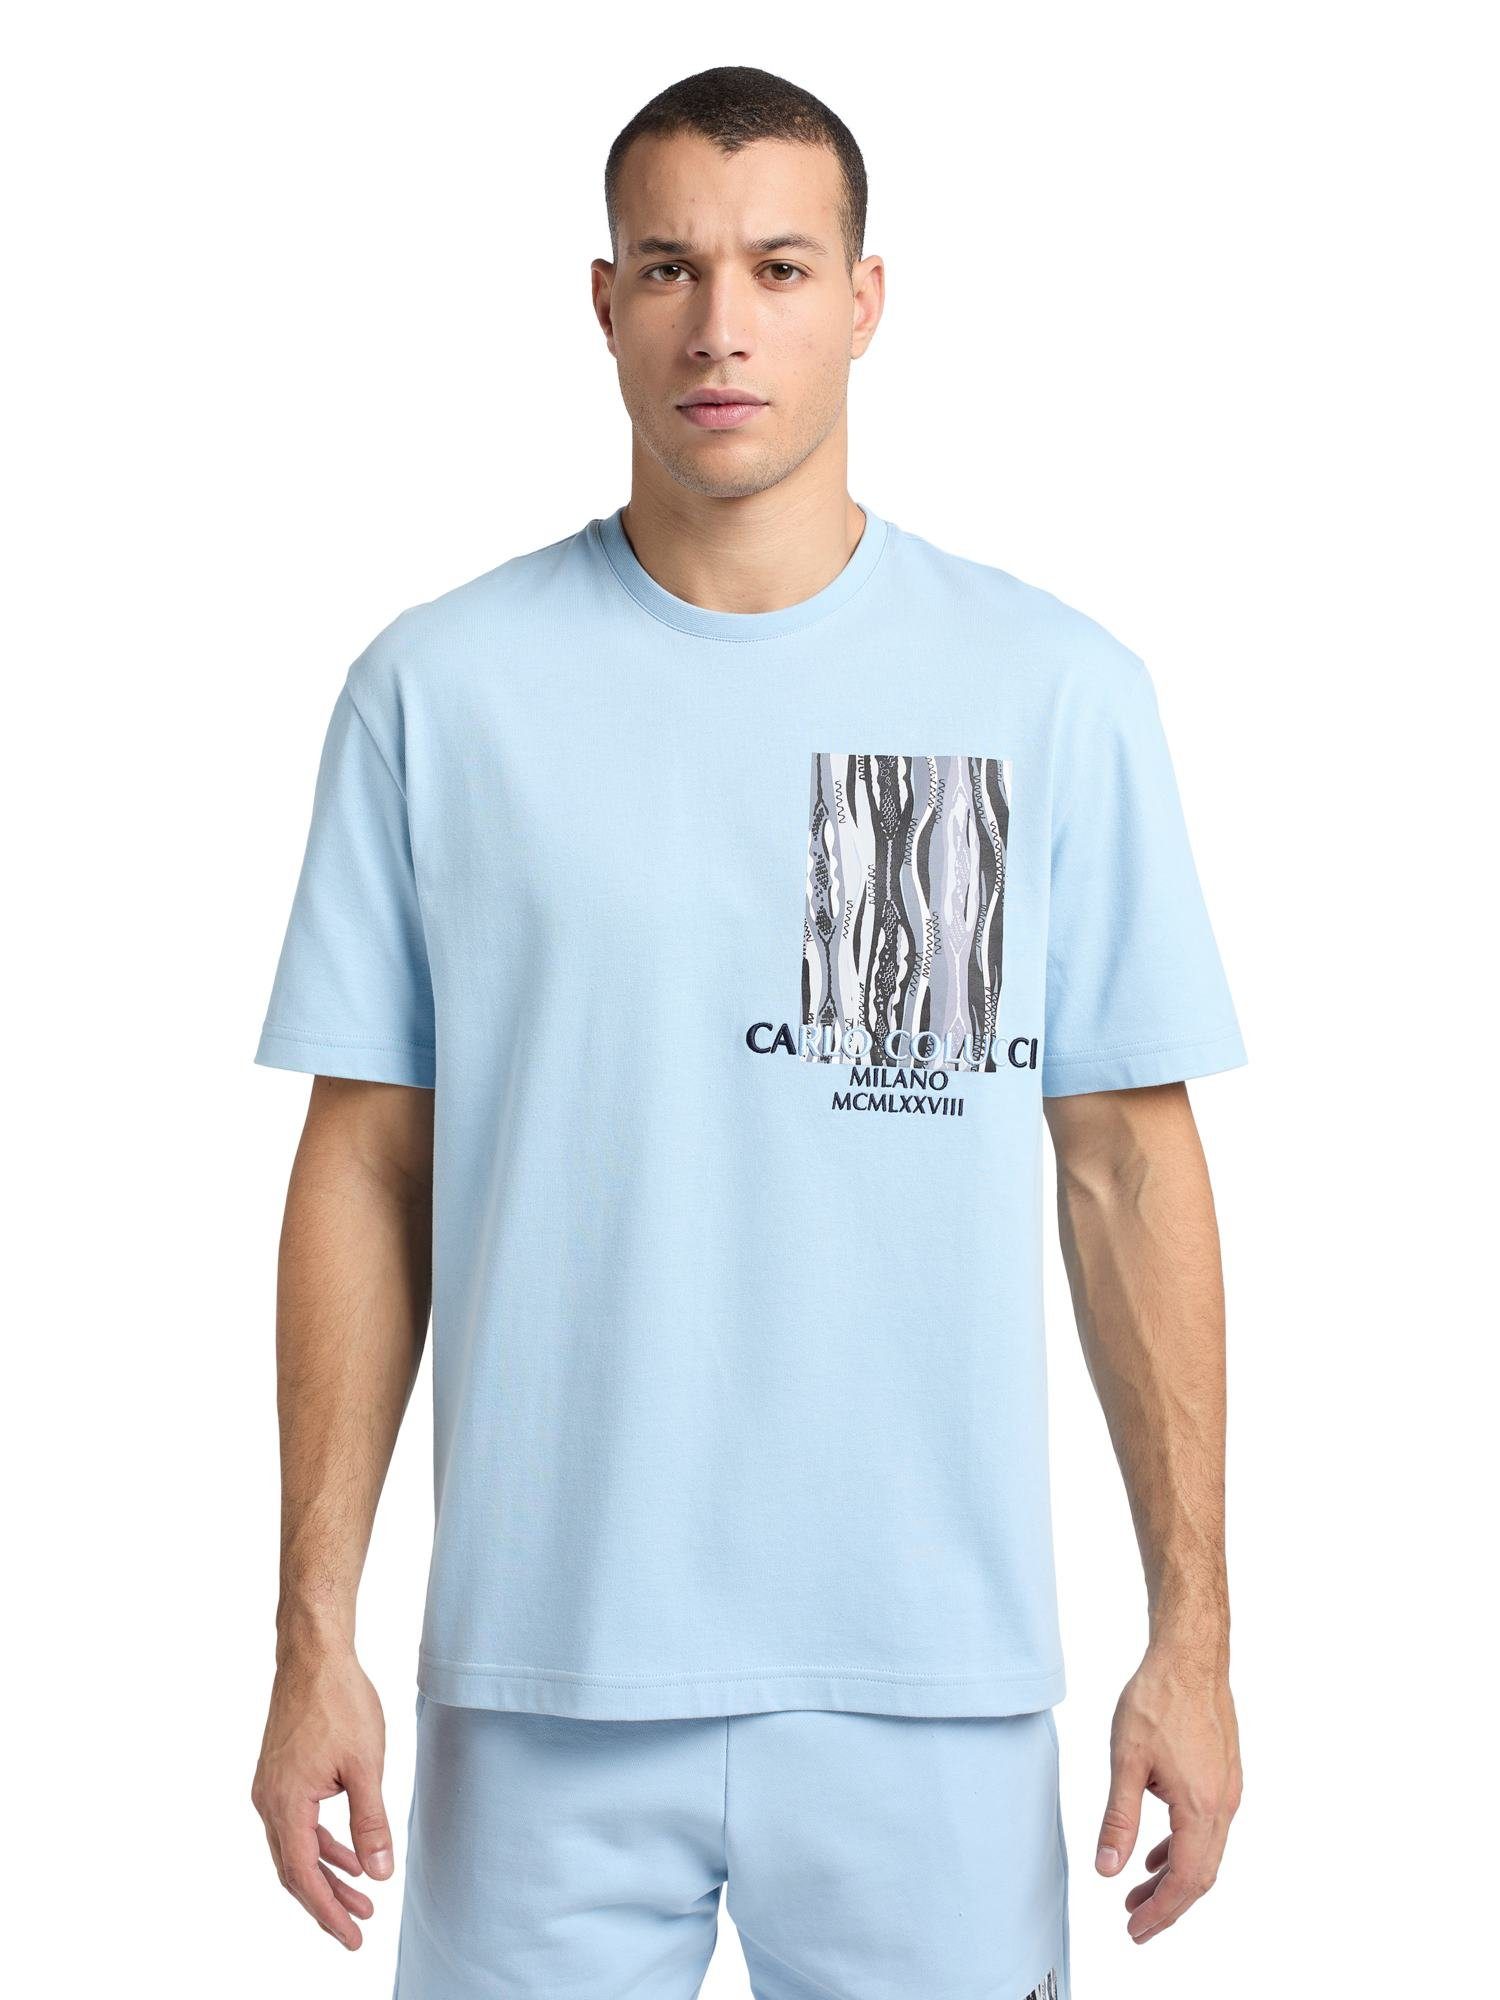 CARLO COLUCCI T-Shirt De Pandis Blau